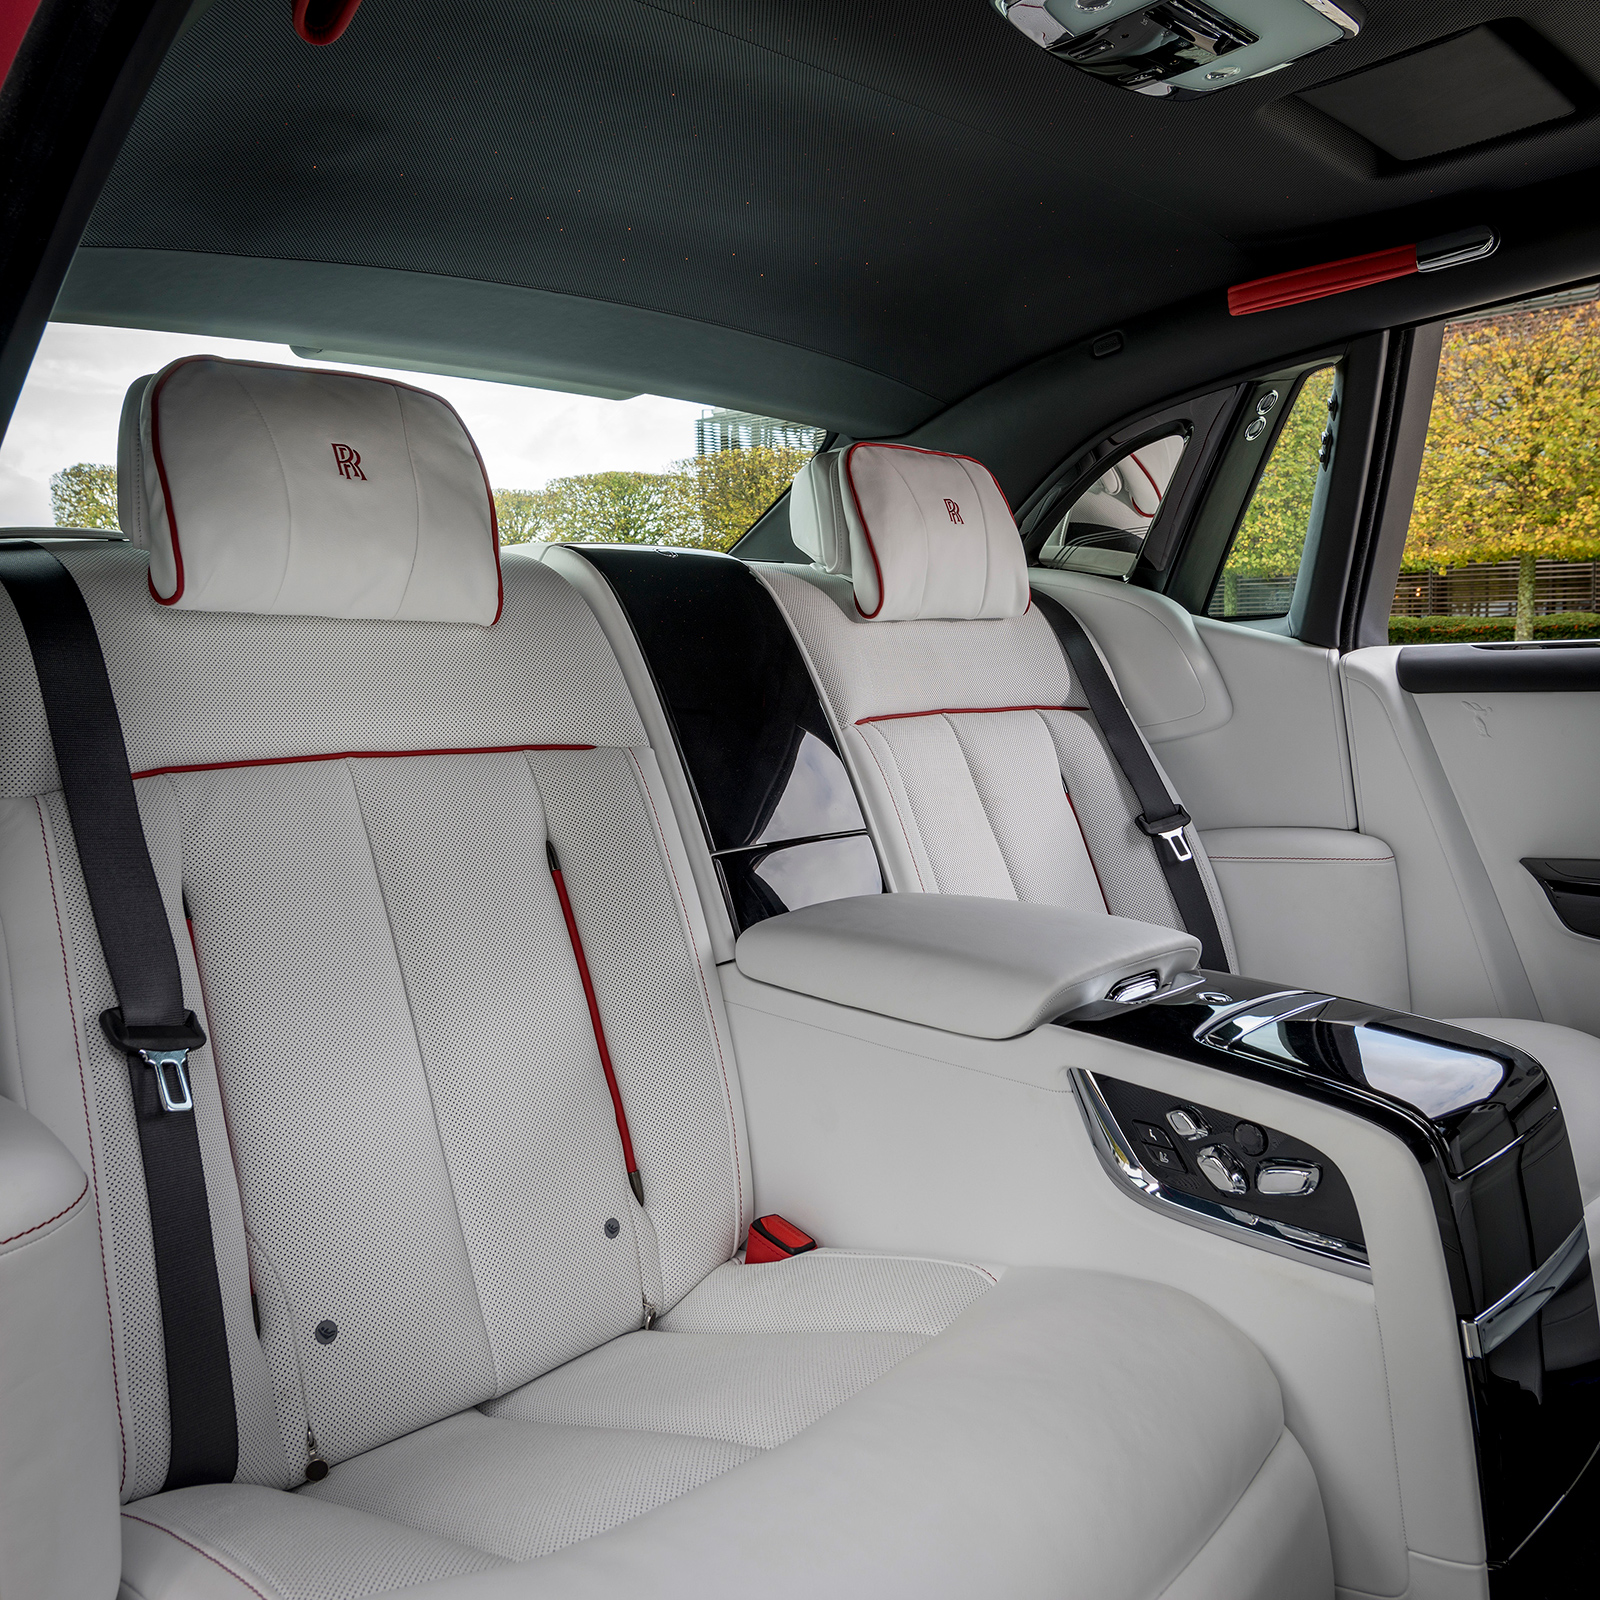 Rolls Royce Phantom interior